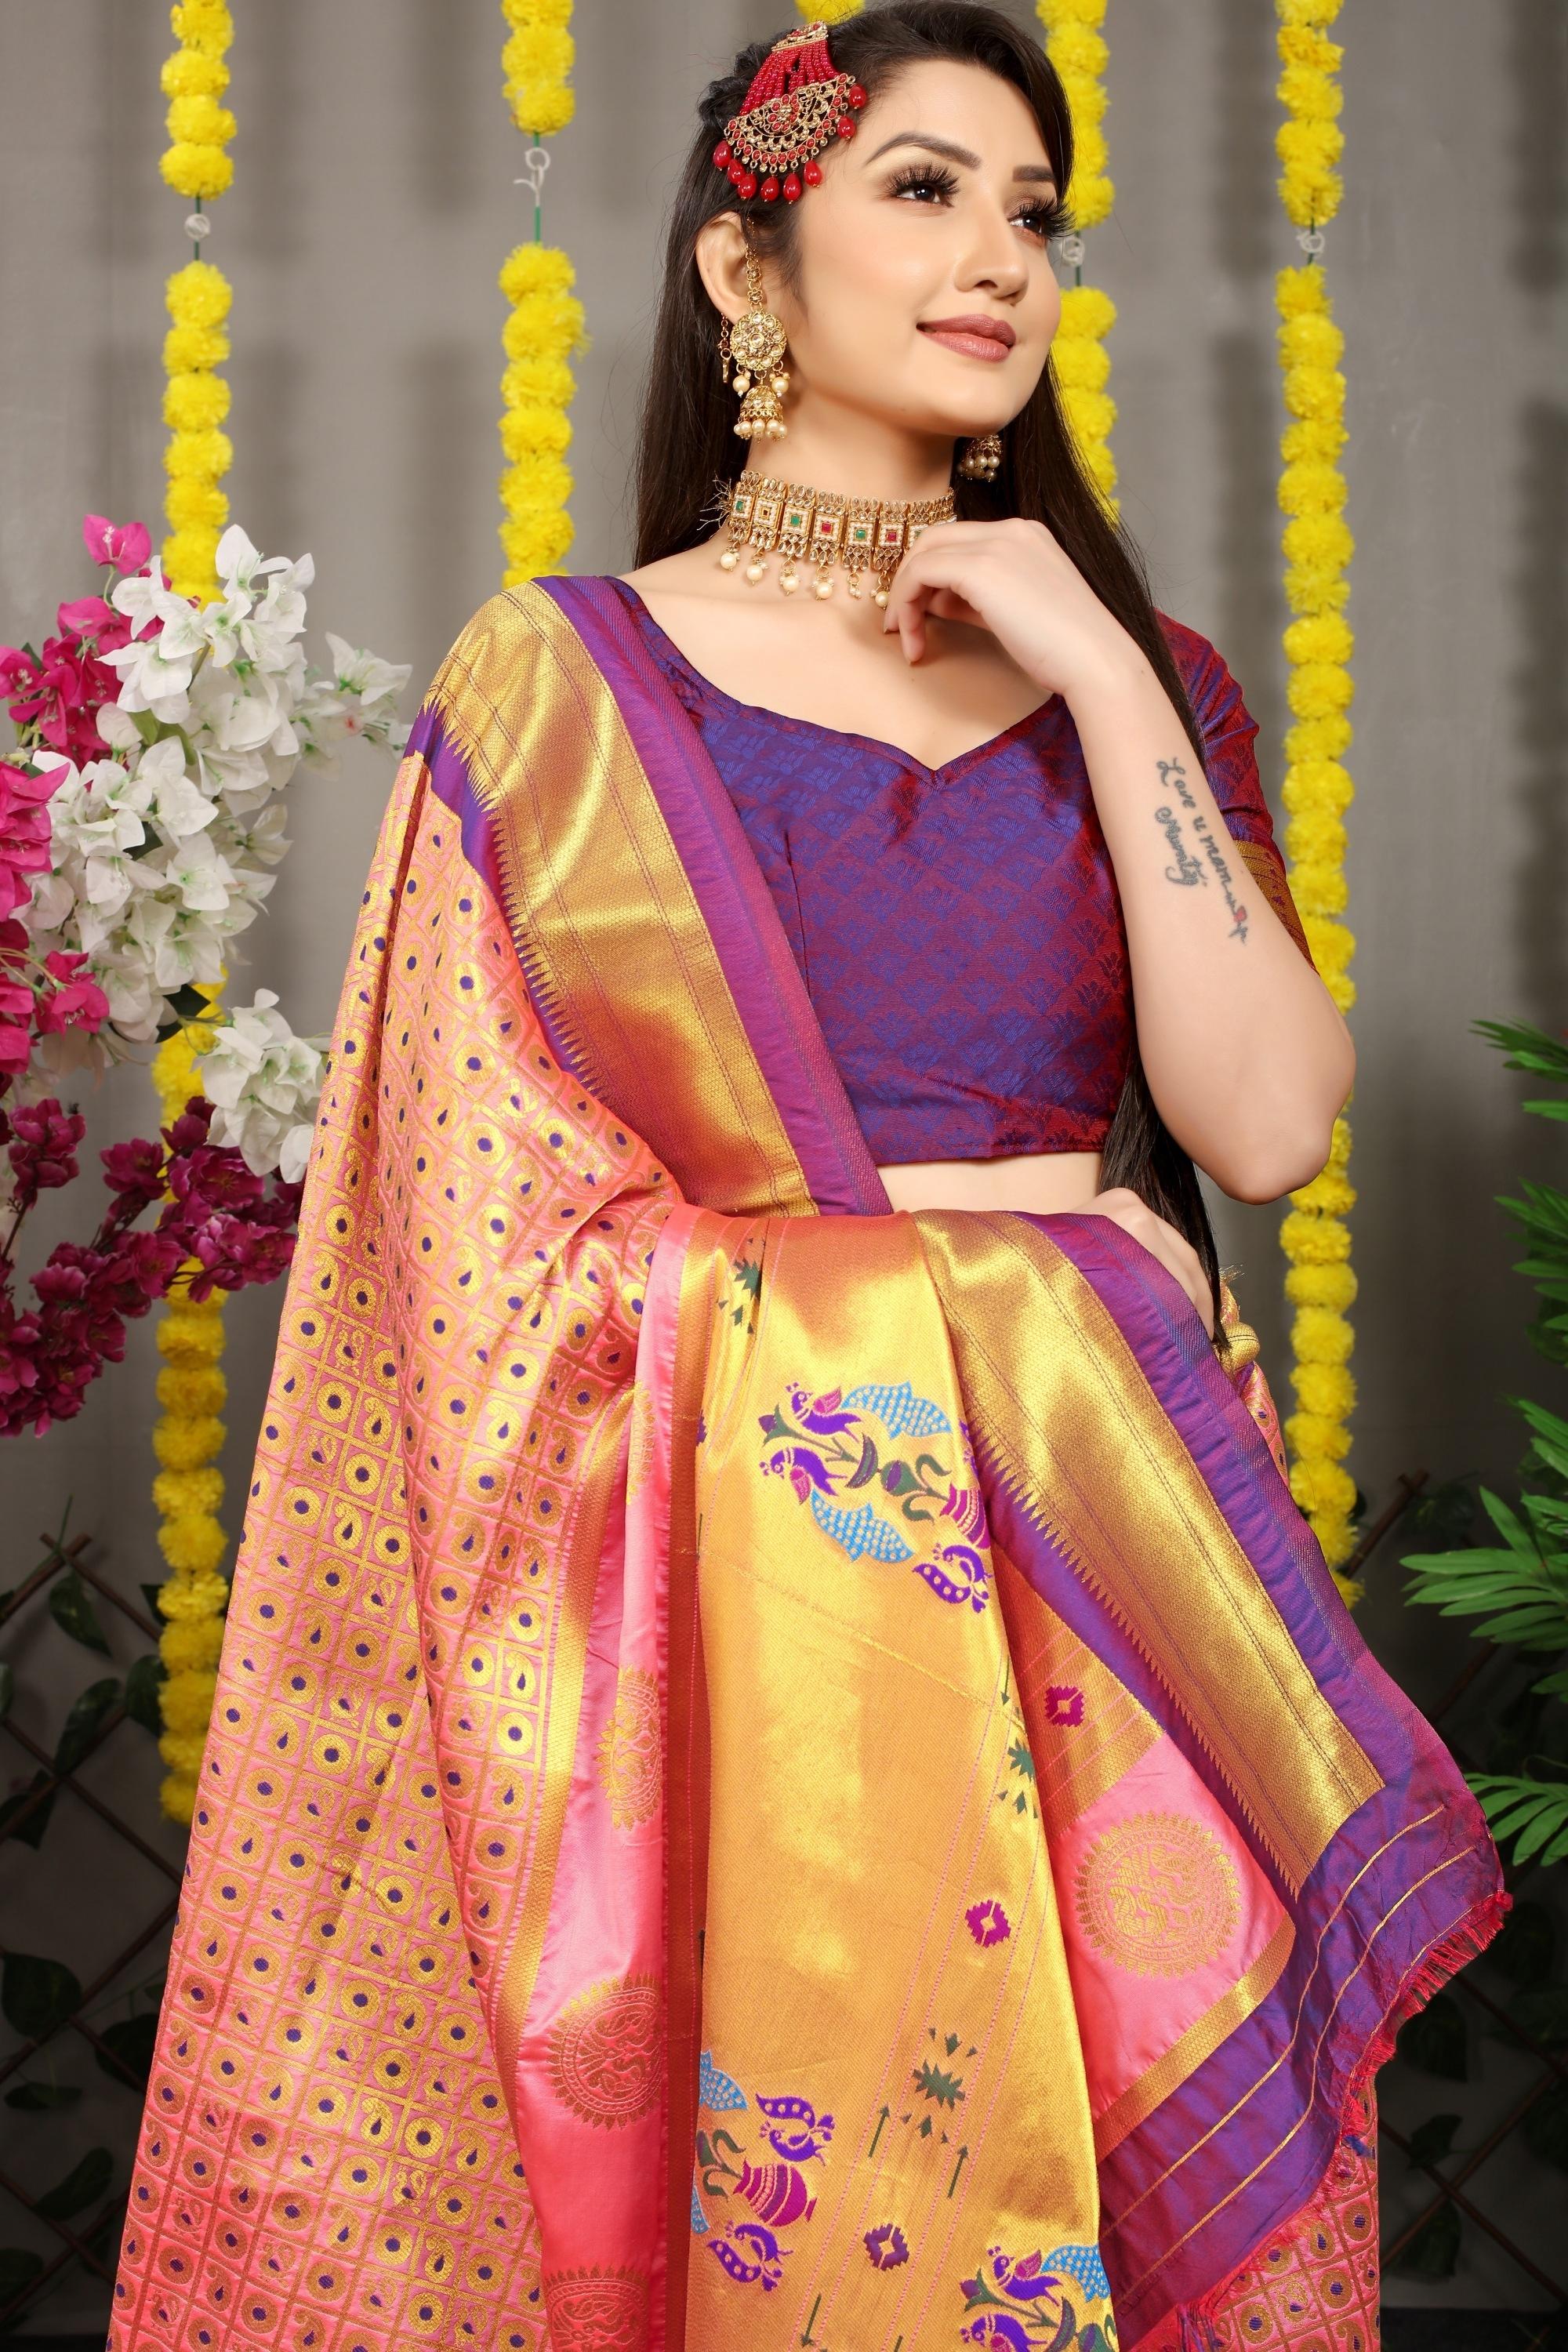 Geet Gauri Fashion Present Premium Paithani Saree at Rs.1475/Pack in surat  offer by geet gauri fashion